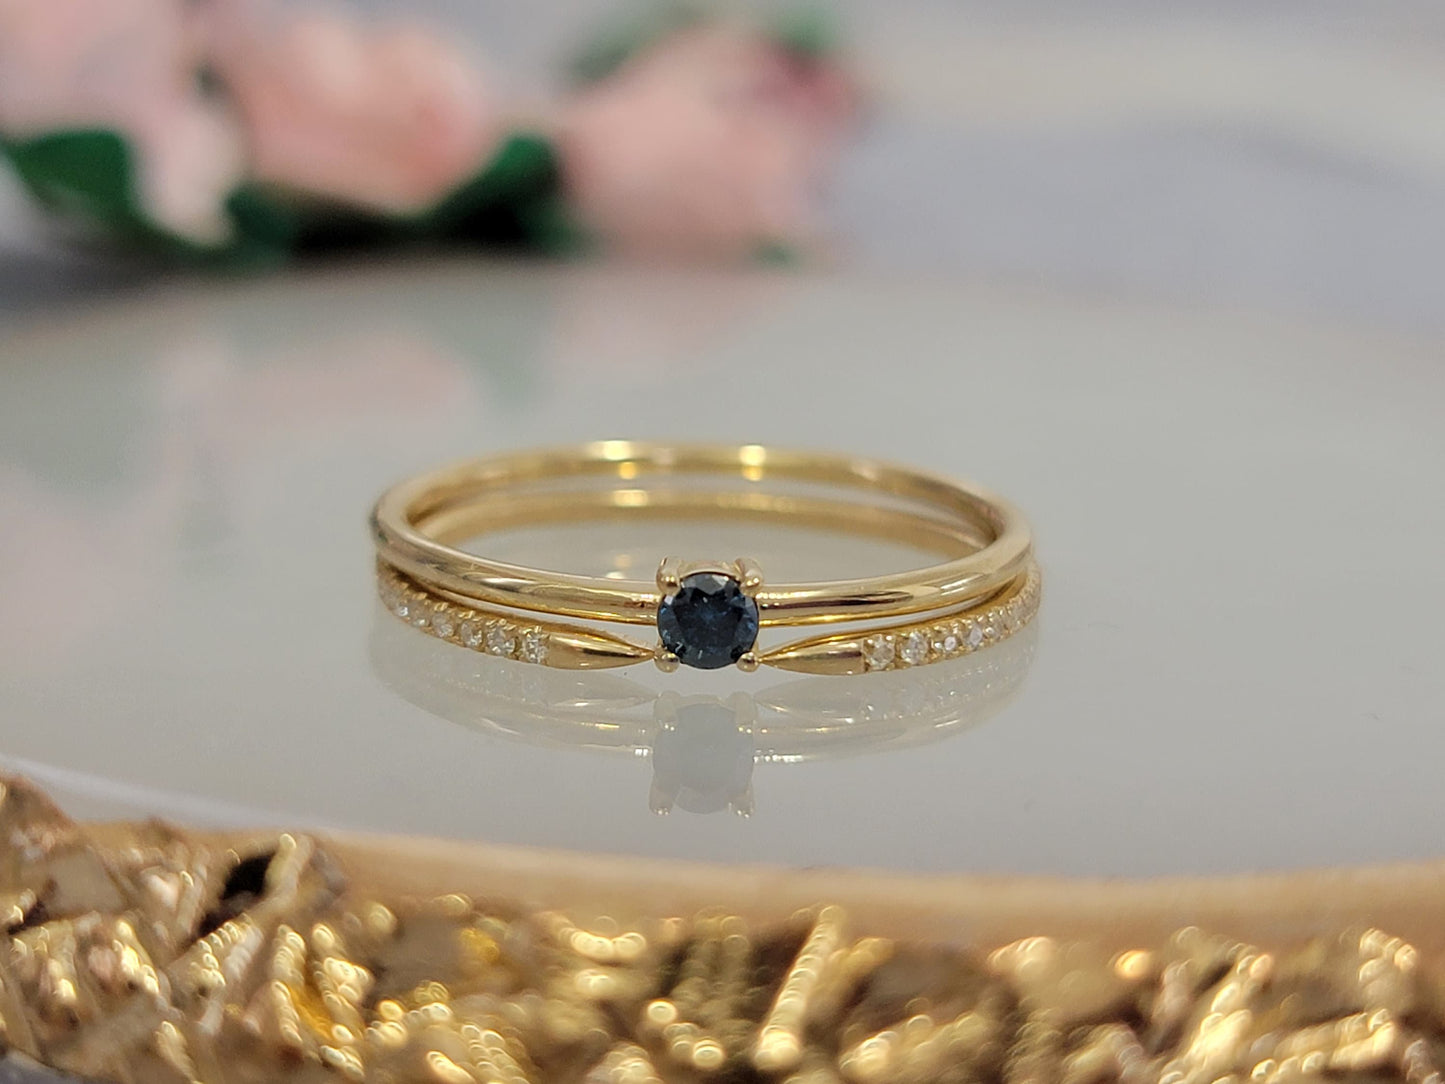 Blue Diamond Ring, 14k White Gold Ring, Minimalist Ring, One Diamond Ring, Diamond Solitaire Ring, Dainty Rings